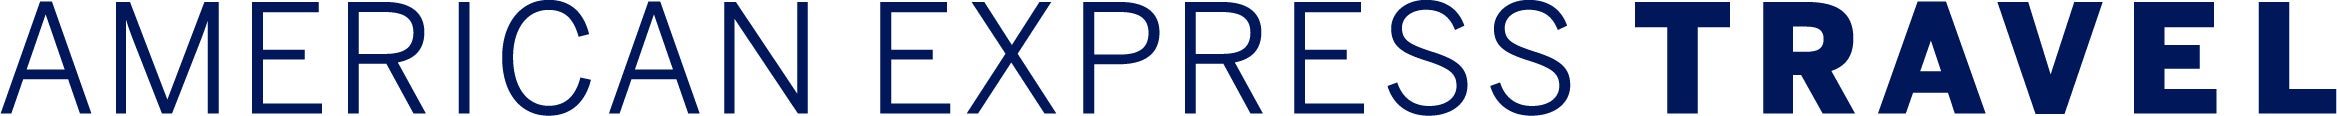 Amex Travel logo